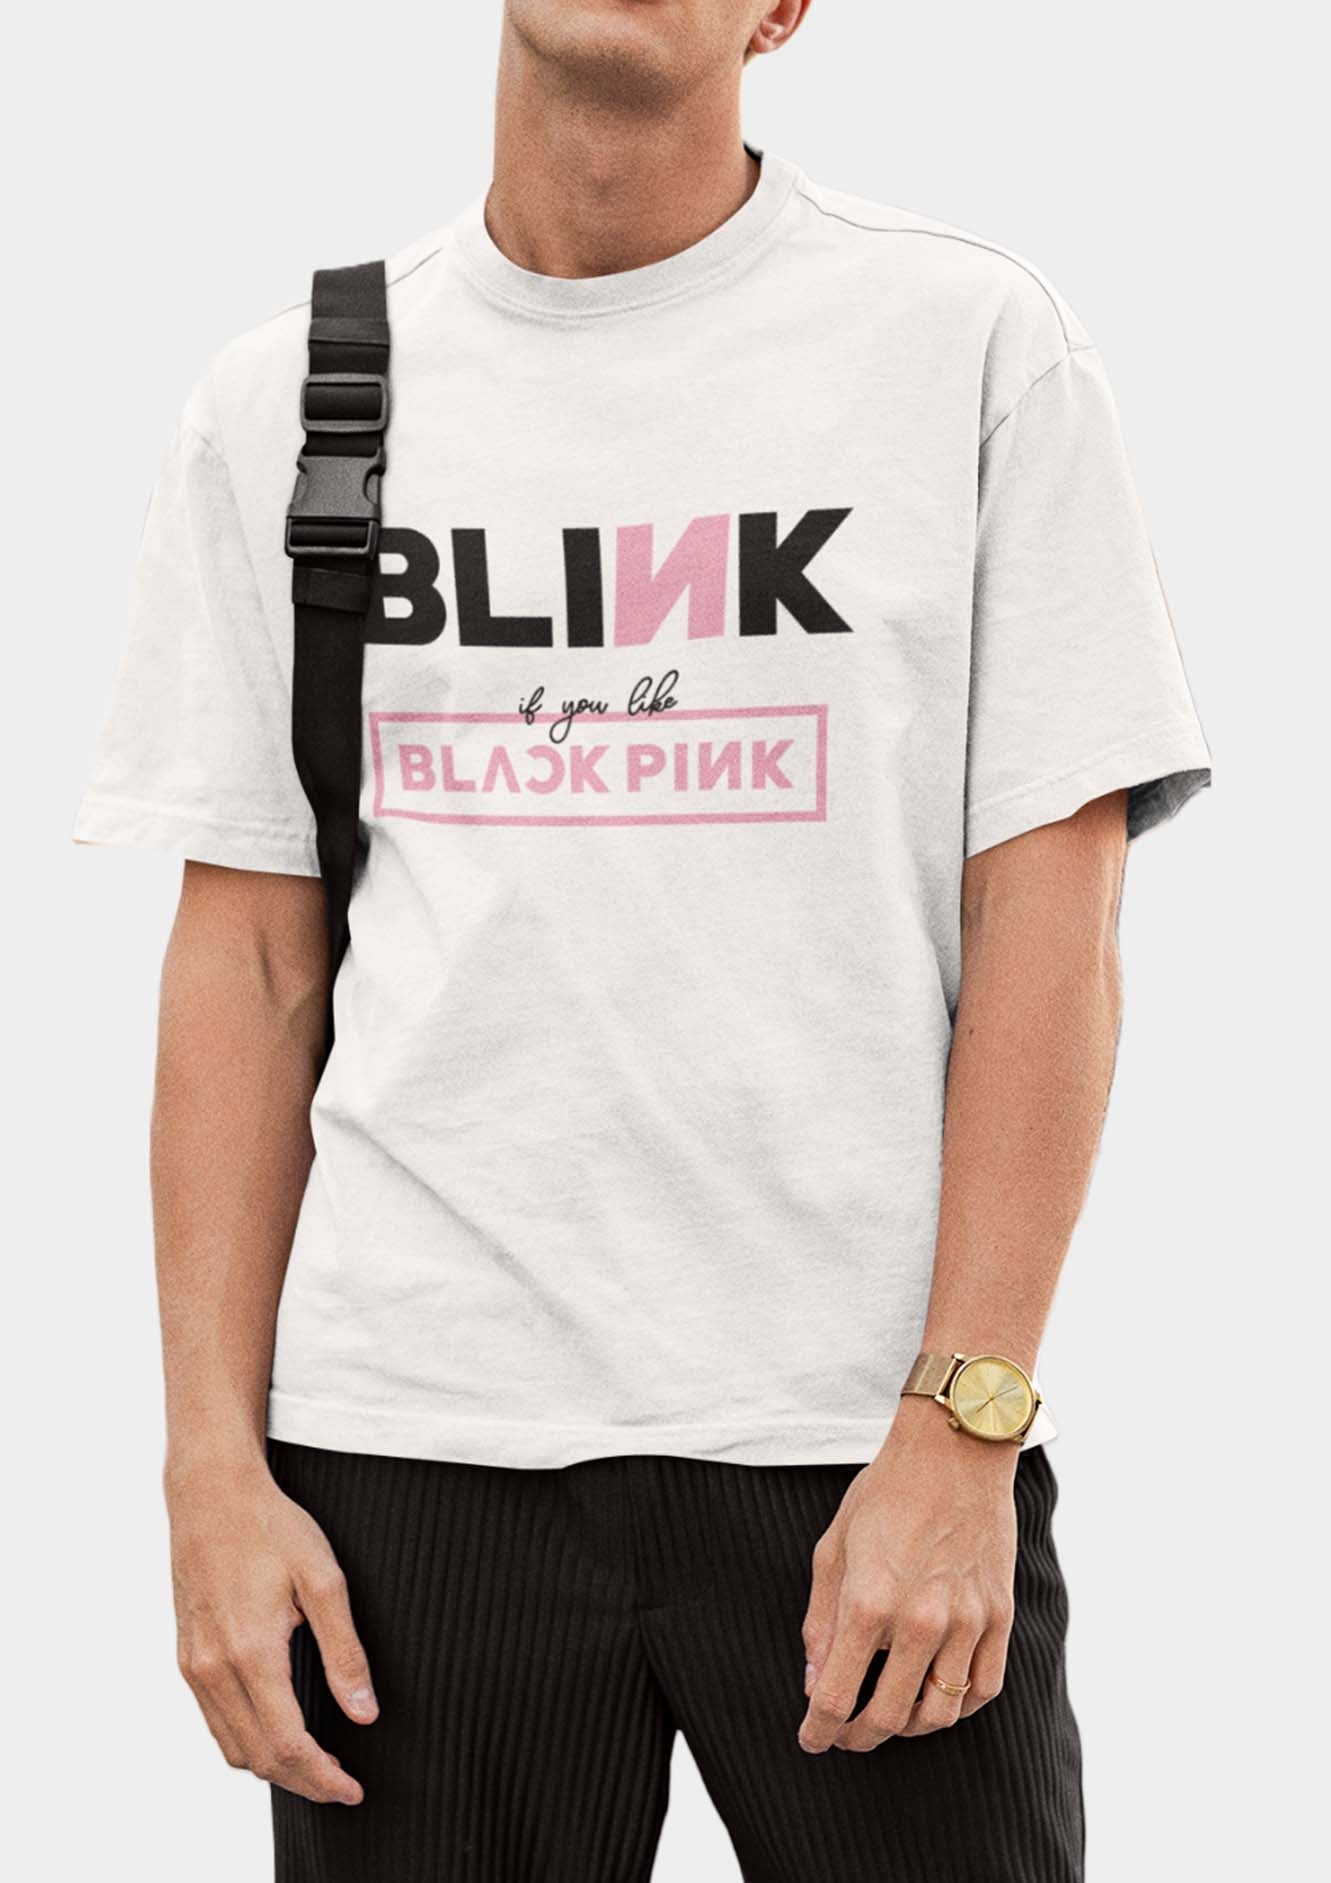 Blackpink Blink Unisex Tshirt